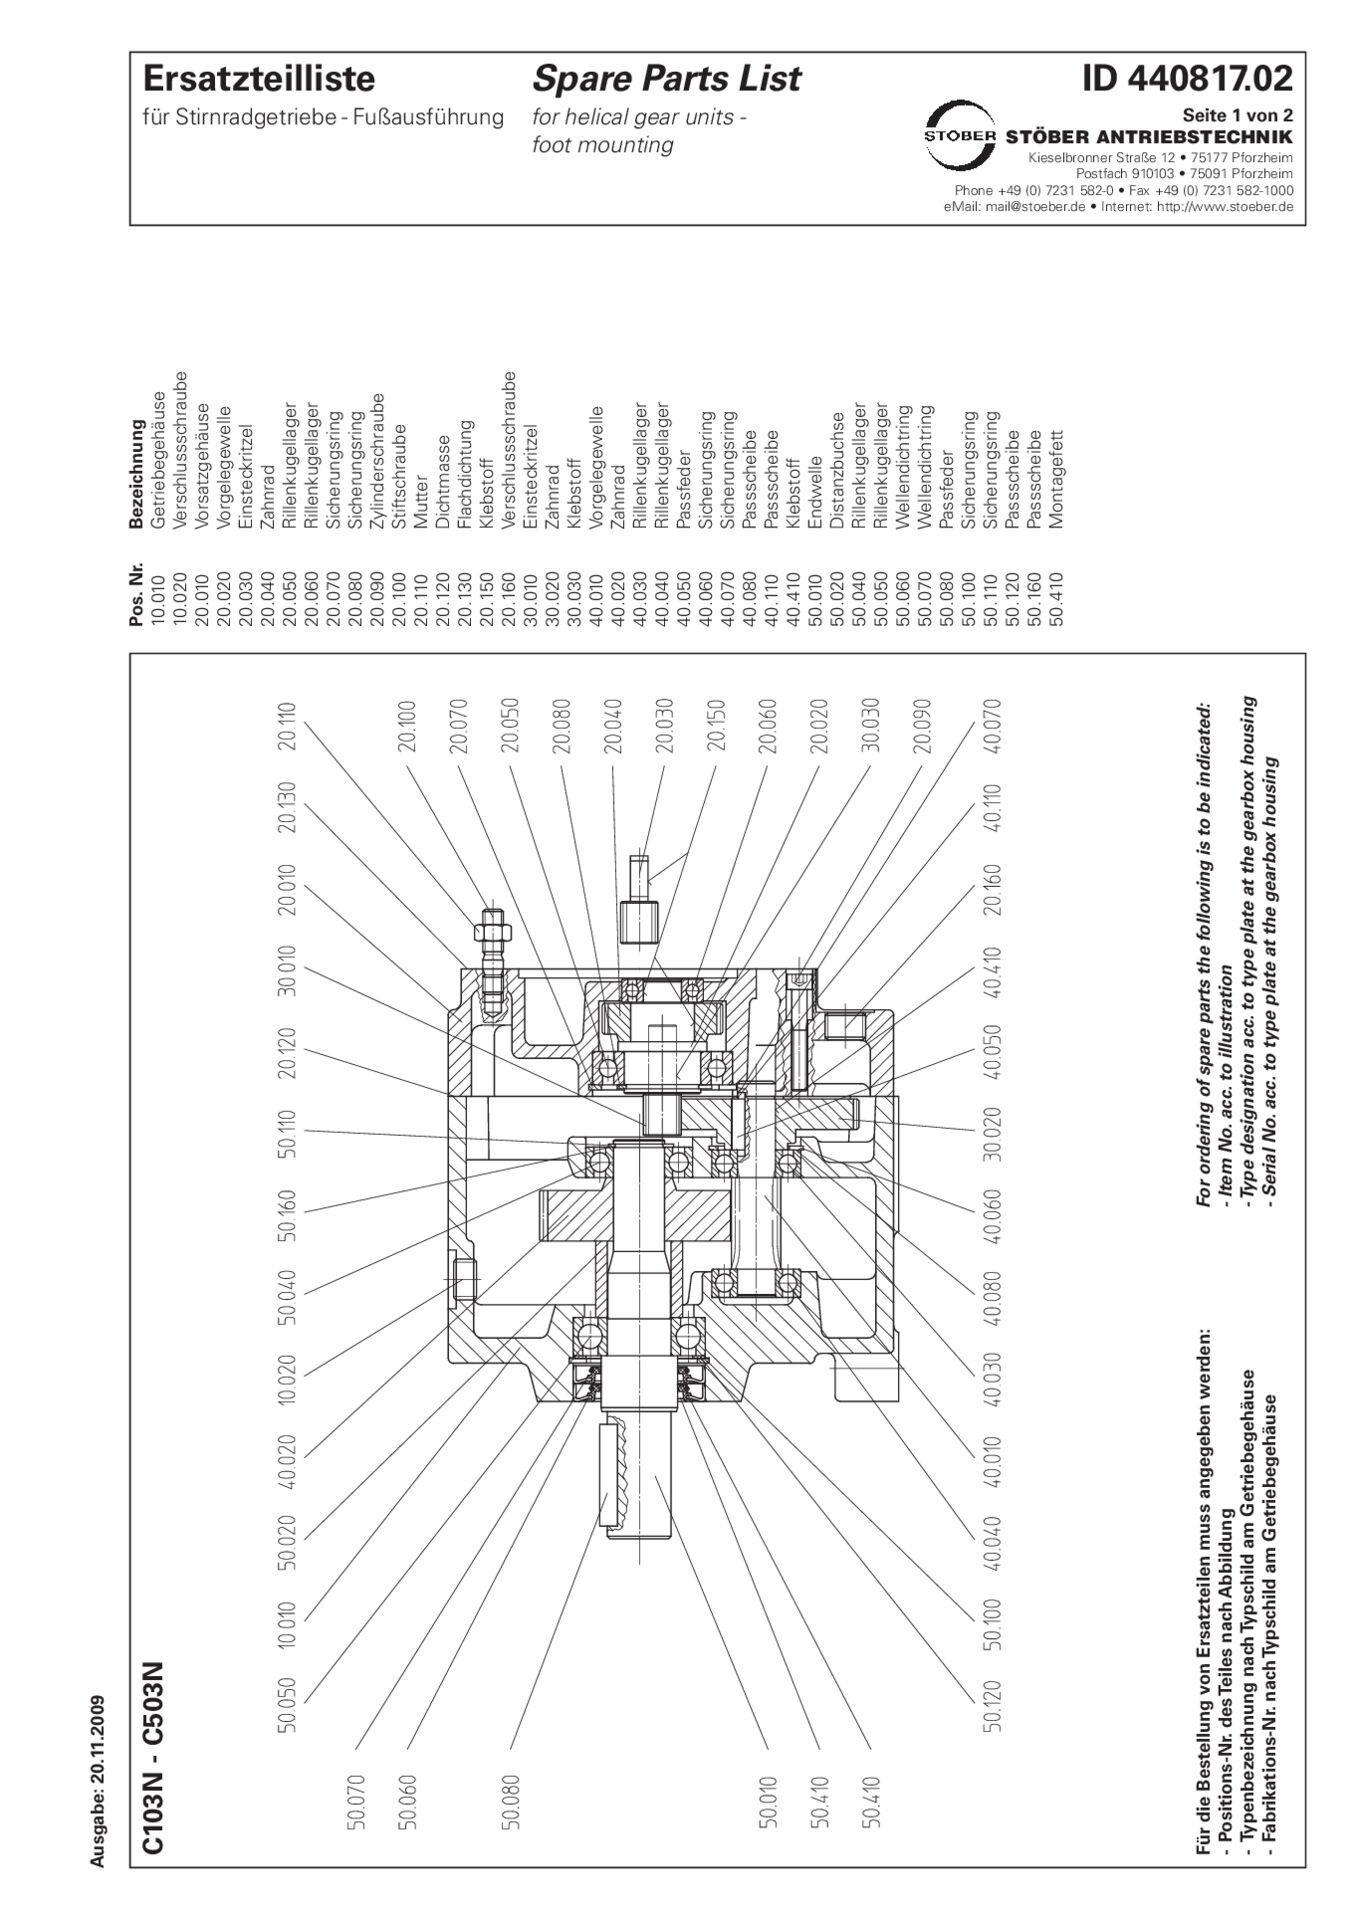 Replacement parts list helical gear units C103 C203 C303 C403 C503 NErsatzteilliste Stirnradgetriebe C103 C203 C303 C403 C503 N